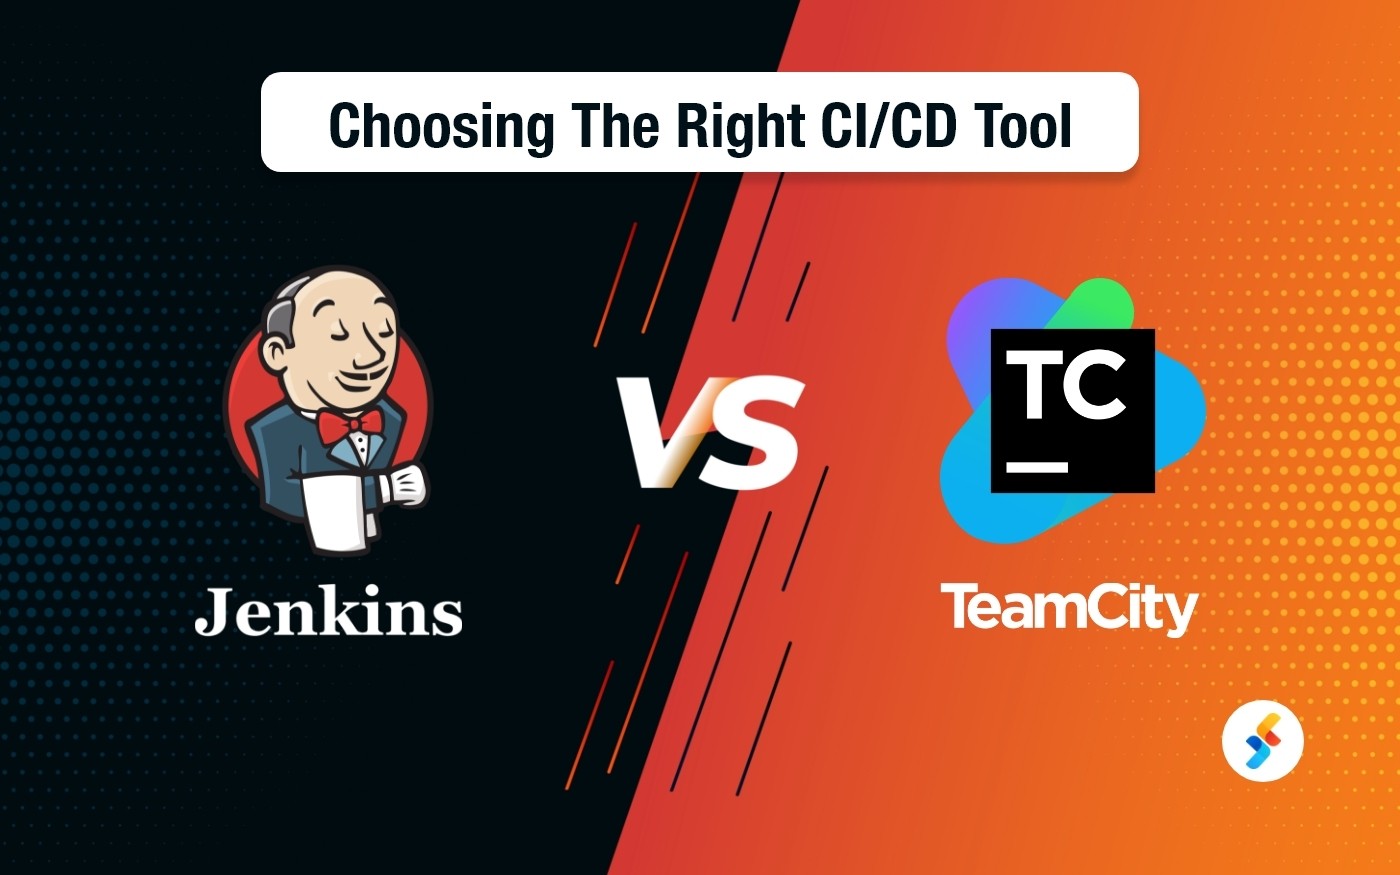 TeamCity vs. Jenkins: Choosing The Right CI/CD Tool